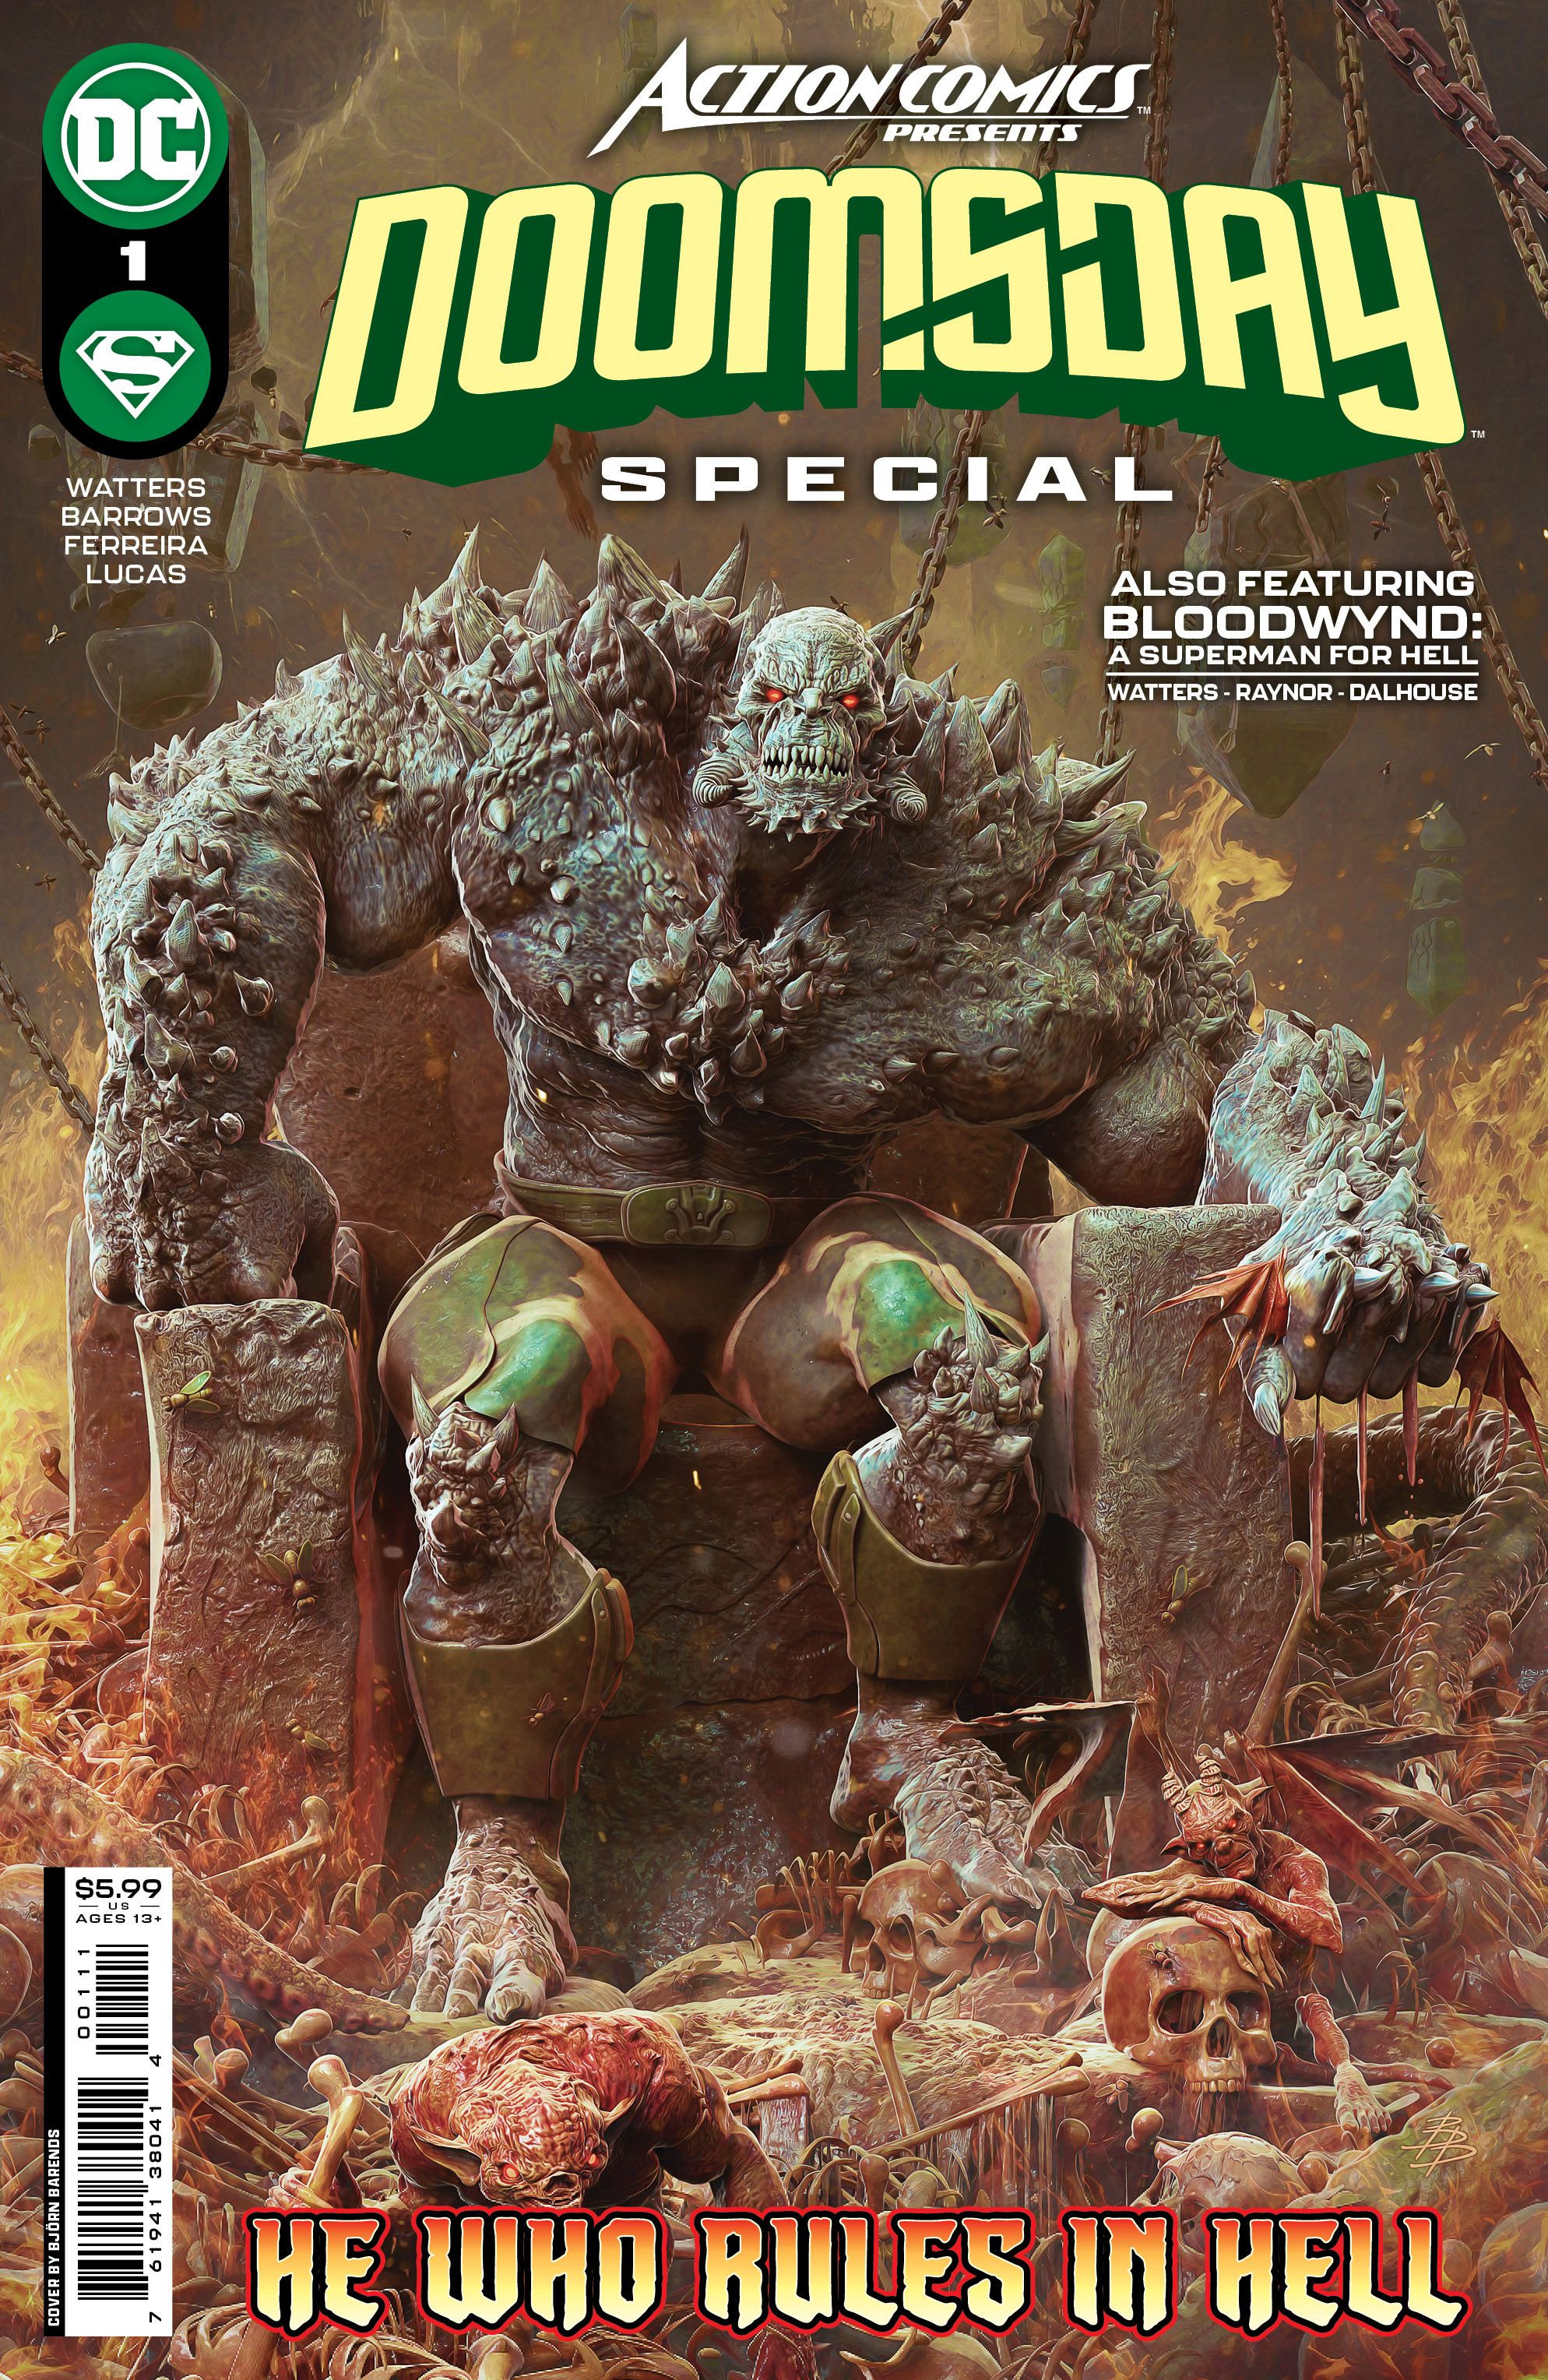 Action Comics Presents: Doomsday Special #1 Comic